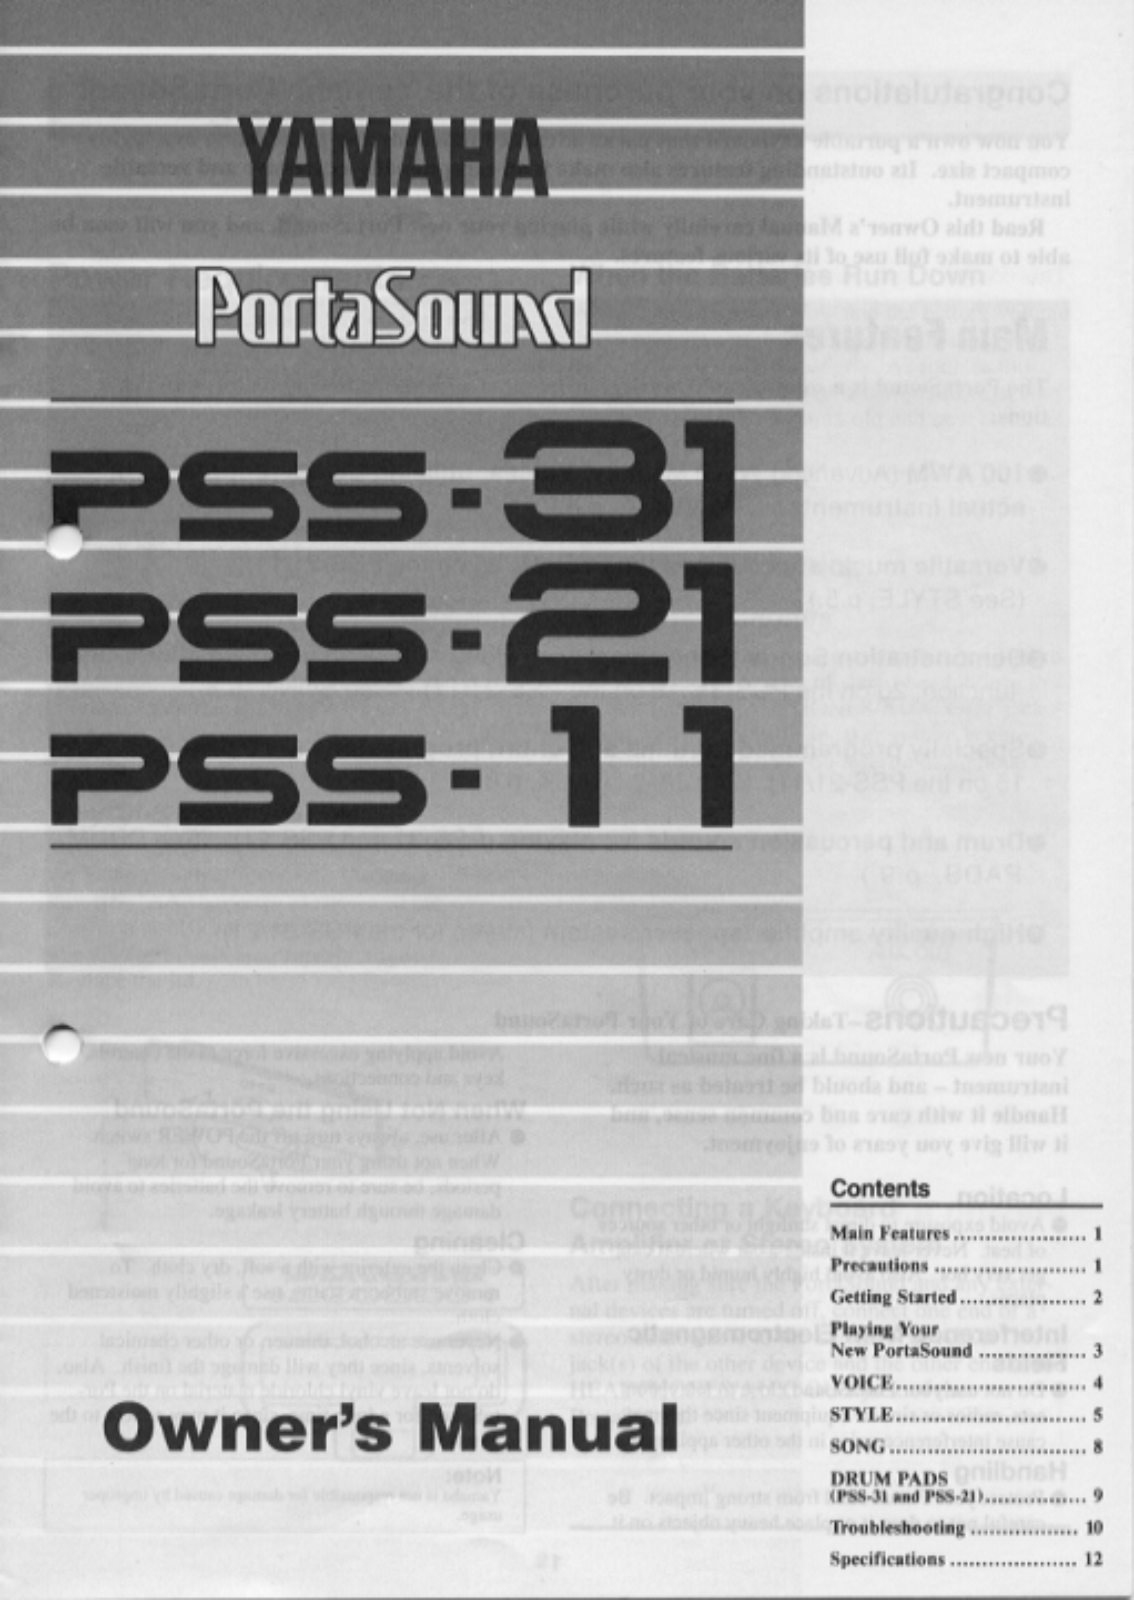 Yamaha PORTASOUND PSS 31, PORTASOUND PSS 21, PORTASOUND PSS 11 Manual